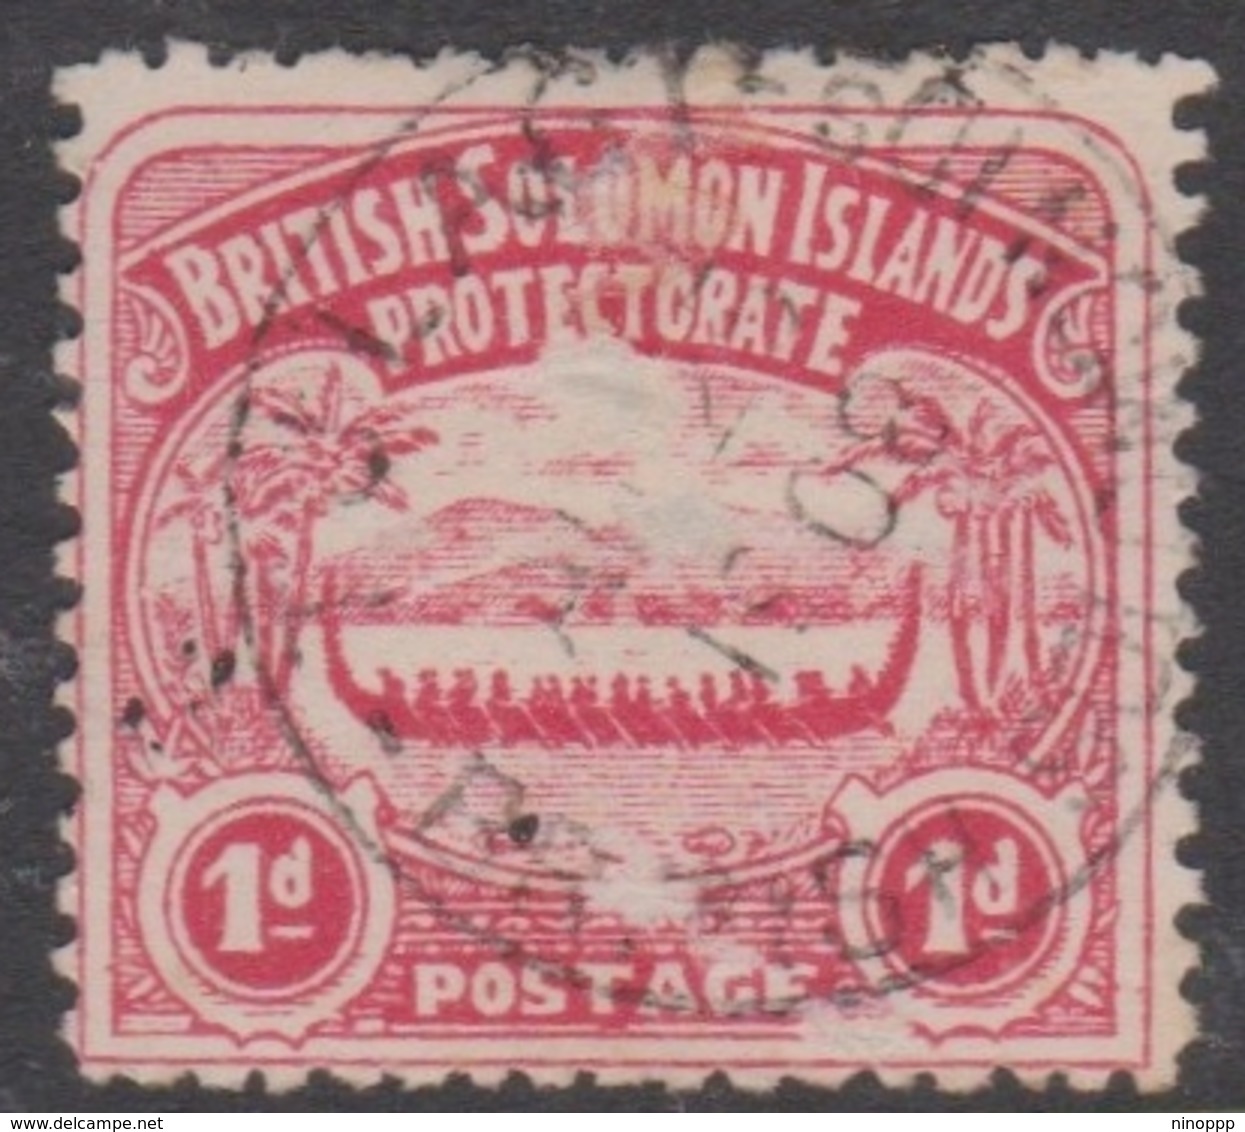 British Solomon Islands SG 2 1907 Large Canoe 1d Rose-carmine, Used, Small Thin - British Solomon Islands (...-1978)